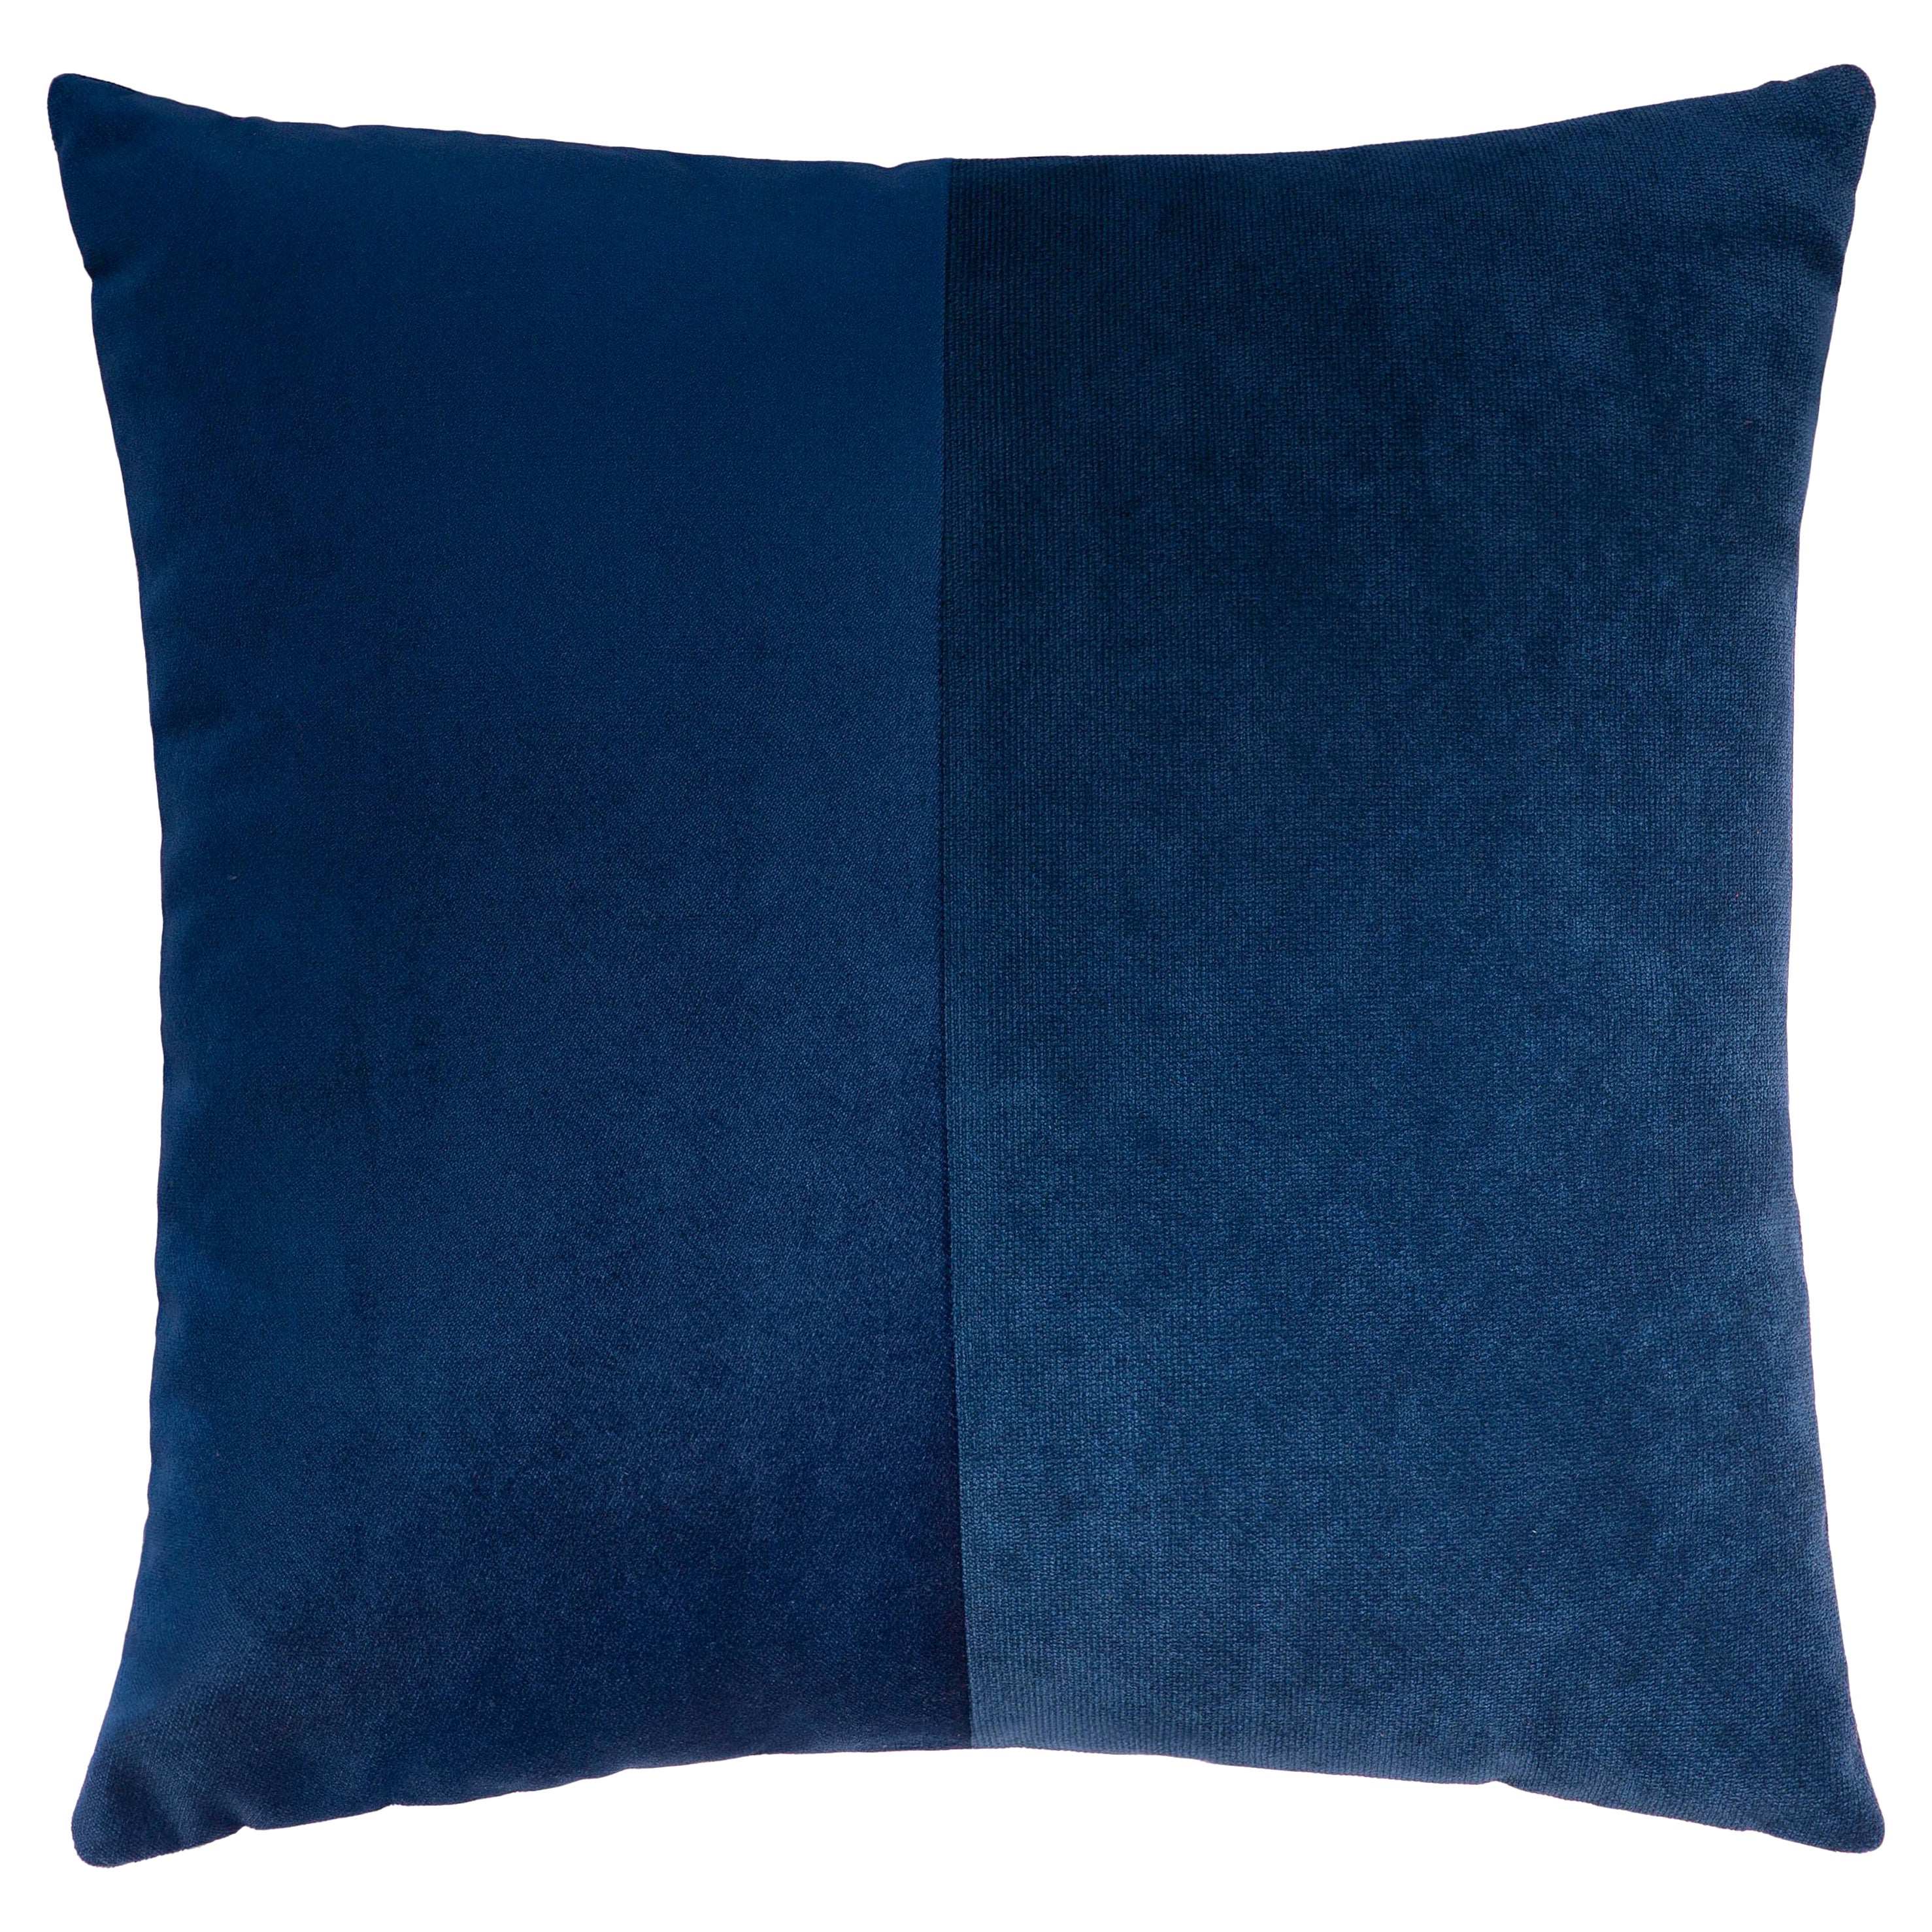 Double Blue Cushion